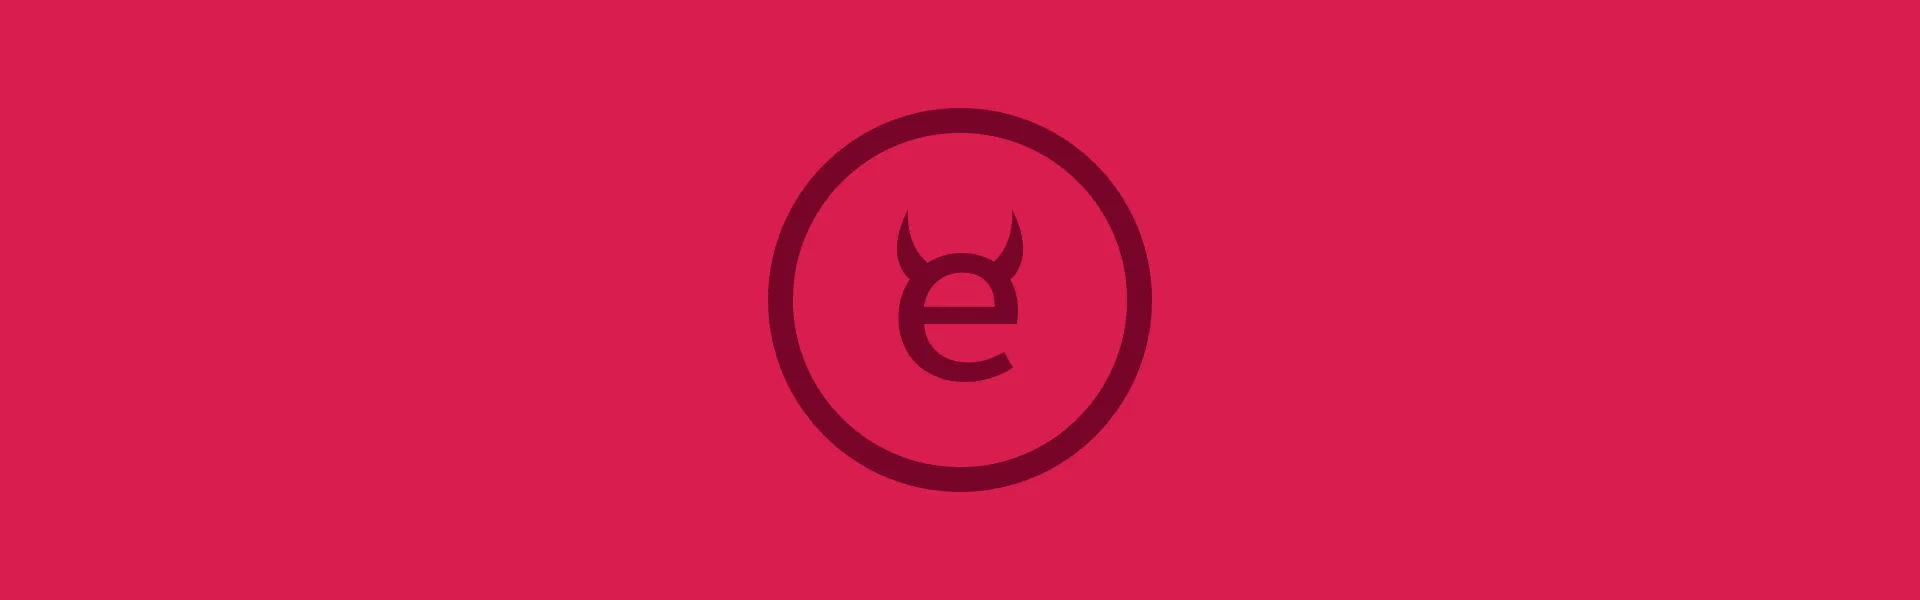 The Exercism logo